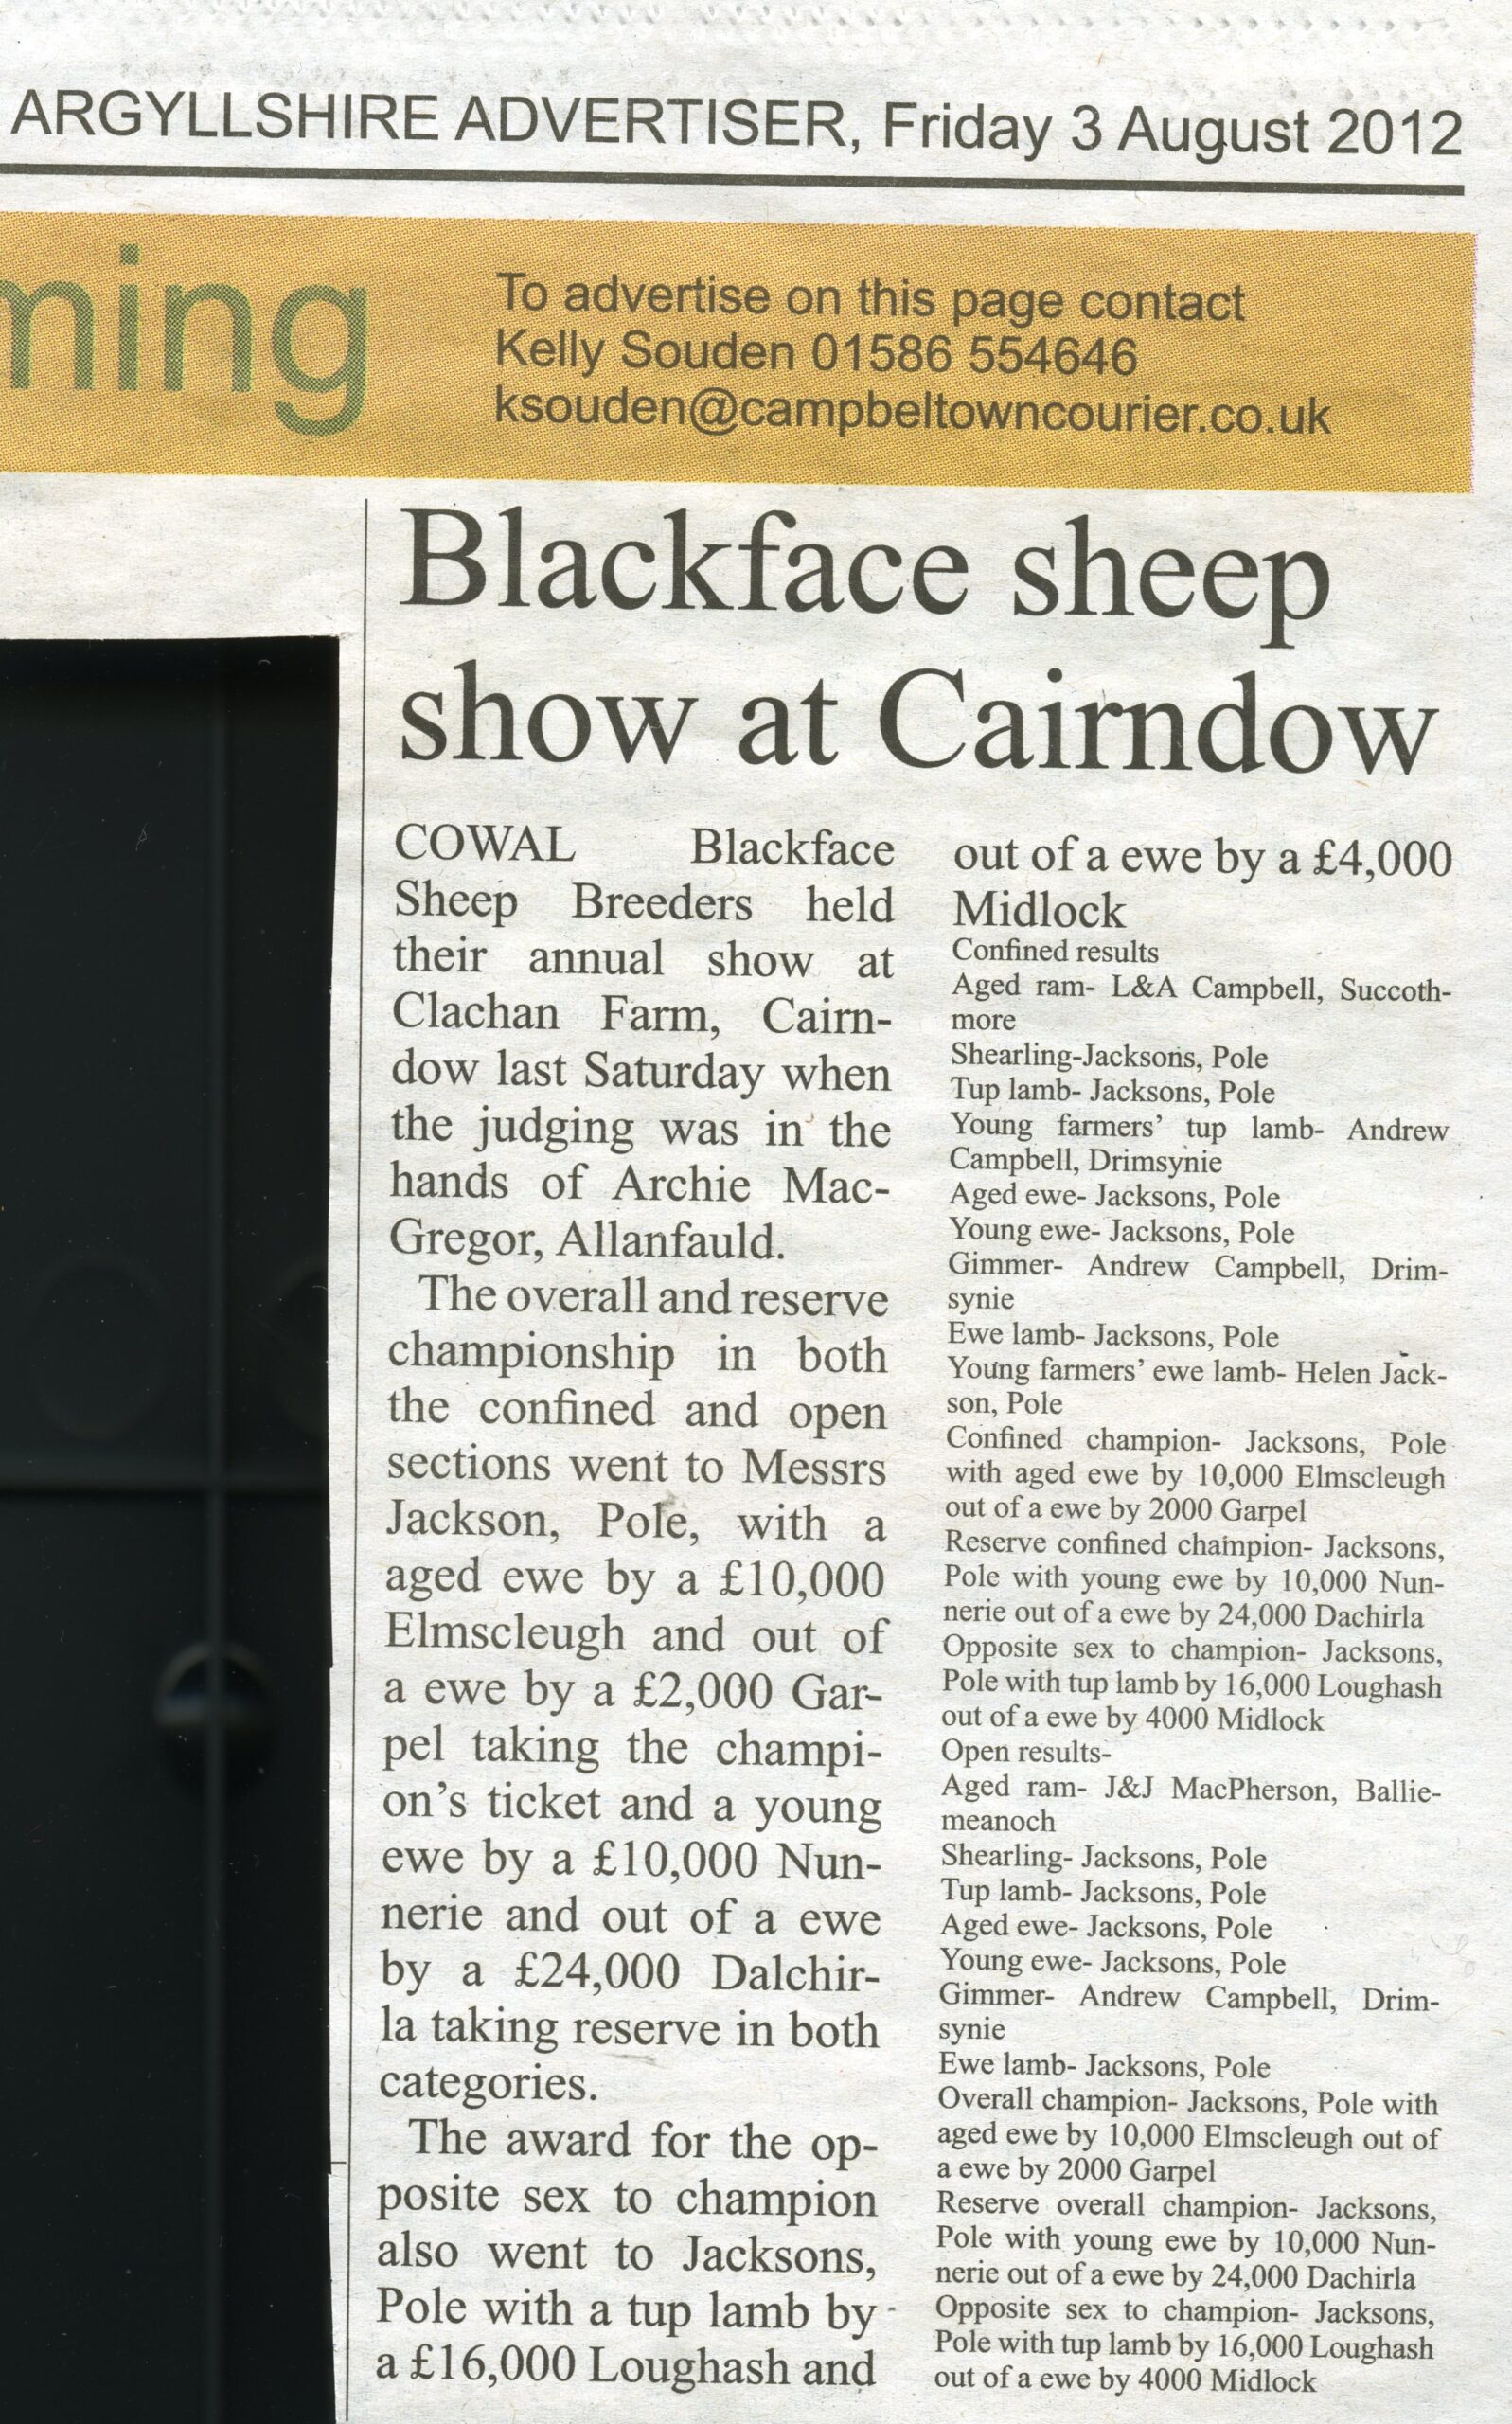 Sheep Show  Cairndow